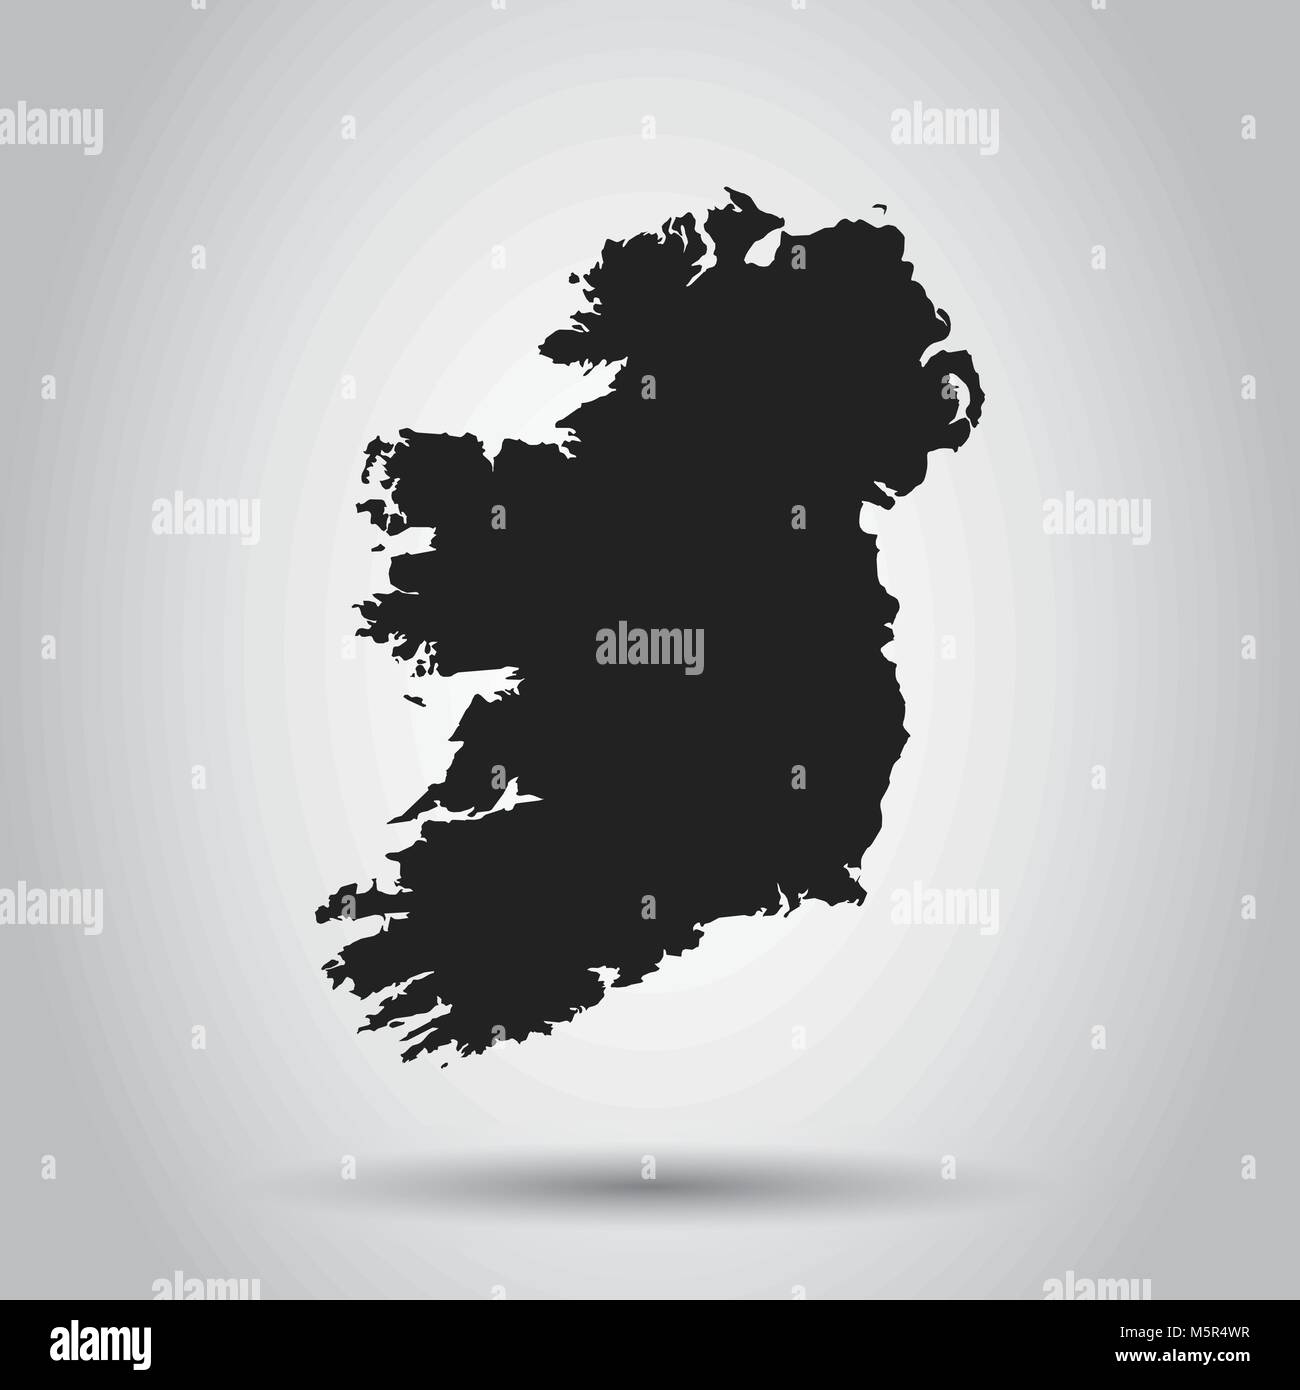 Ireland vector map. Black icon on white background. Stock Vector